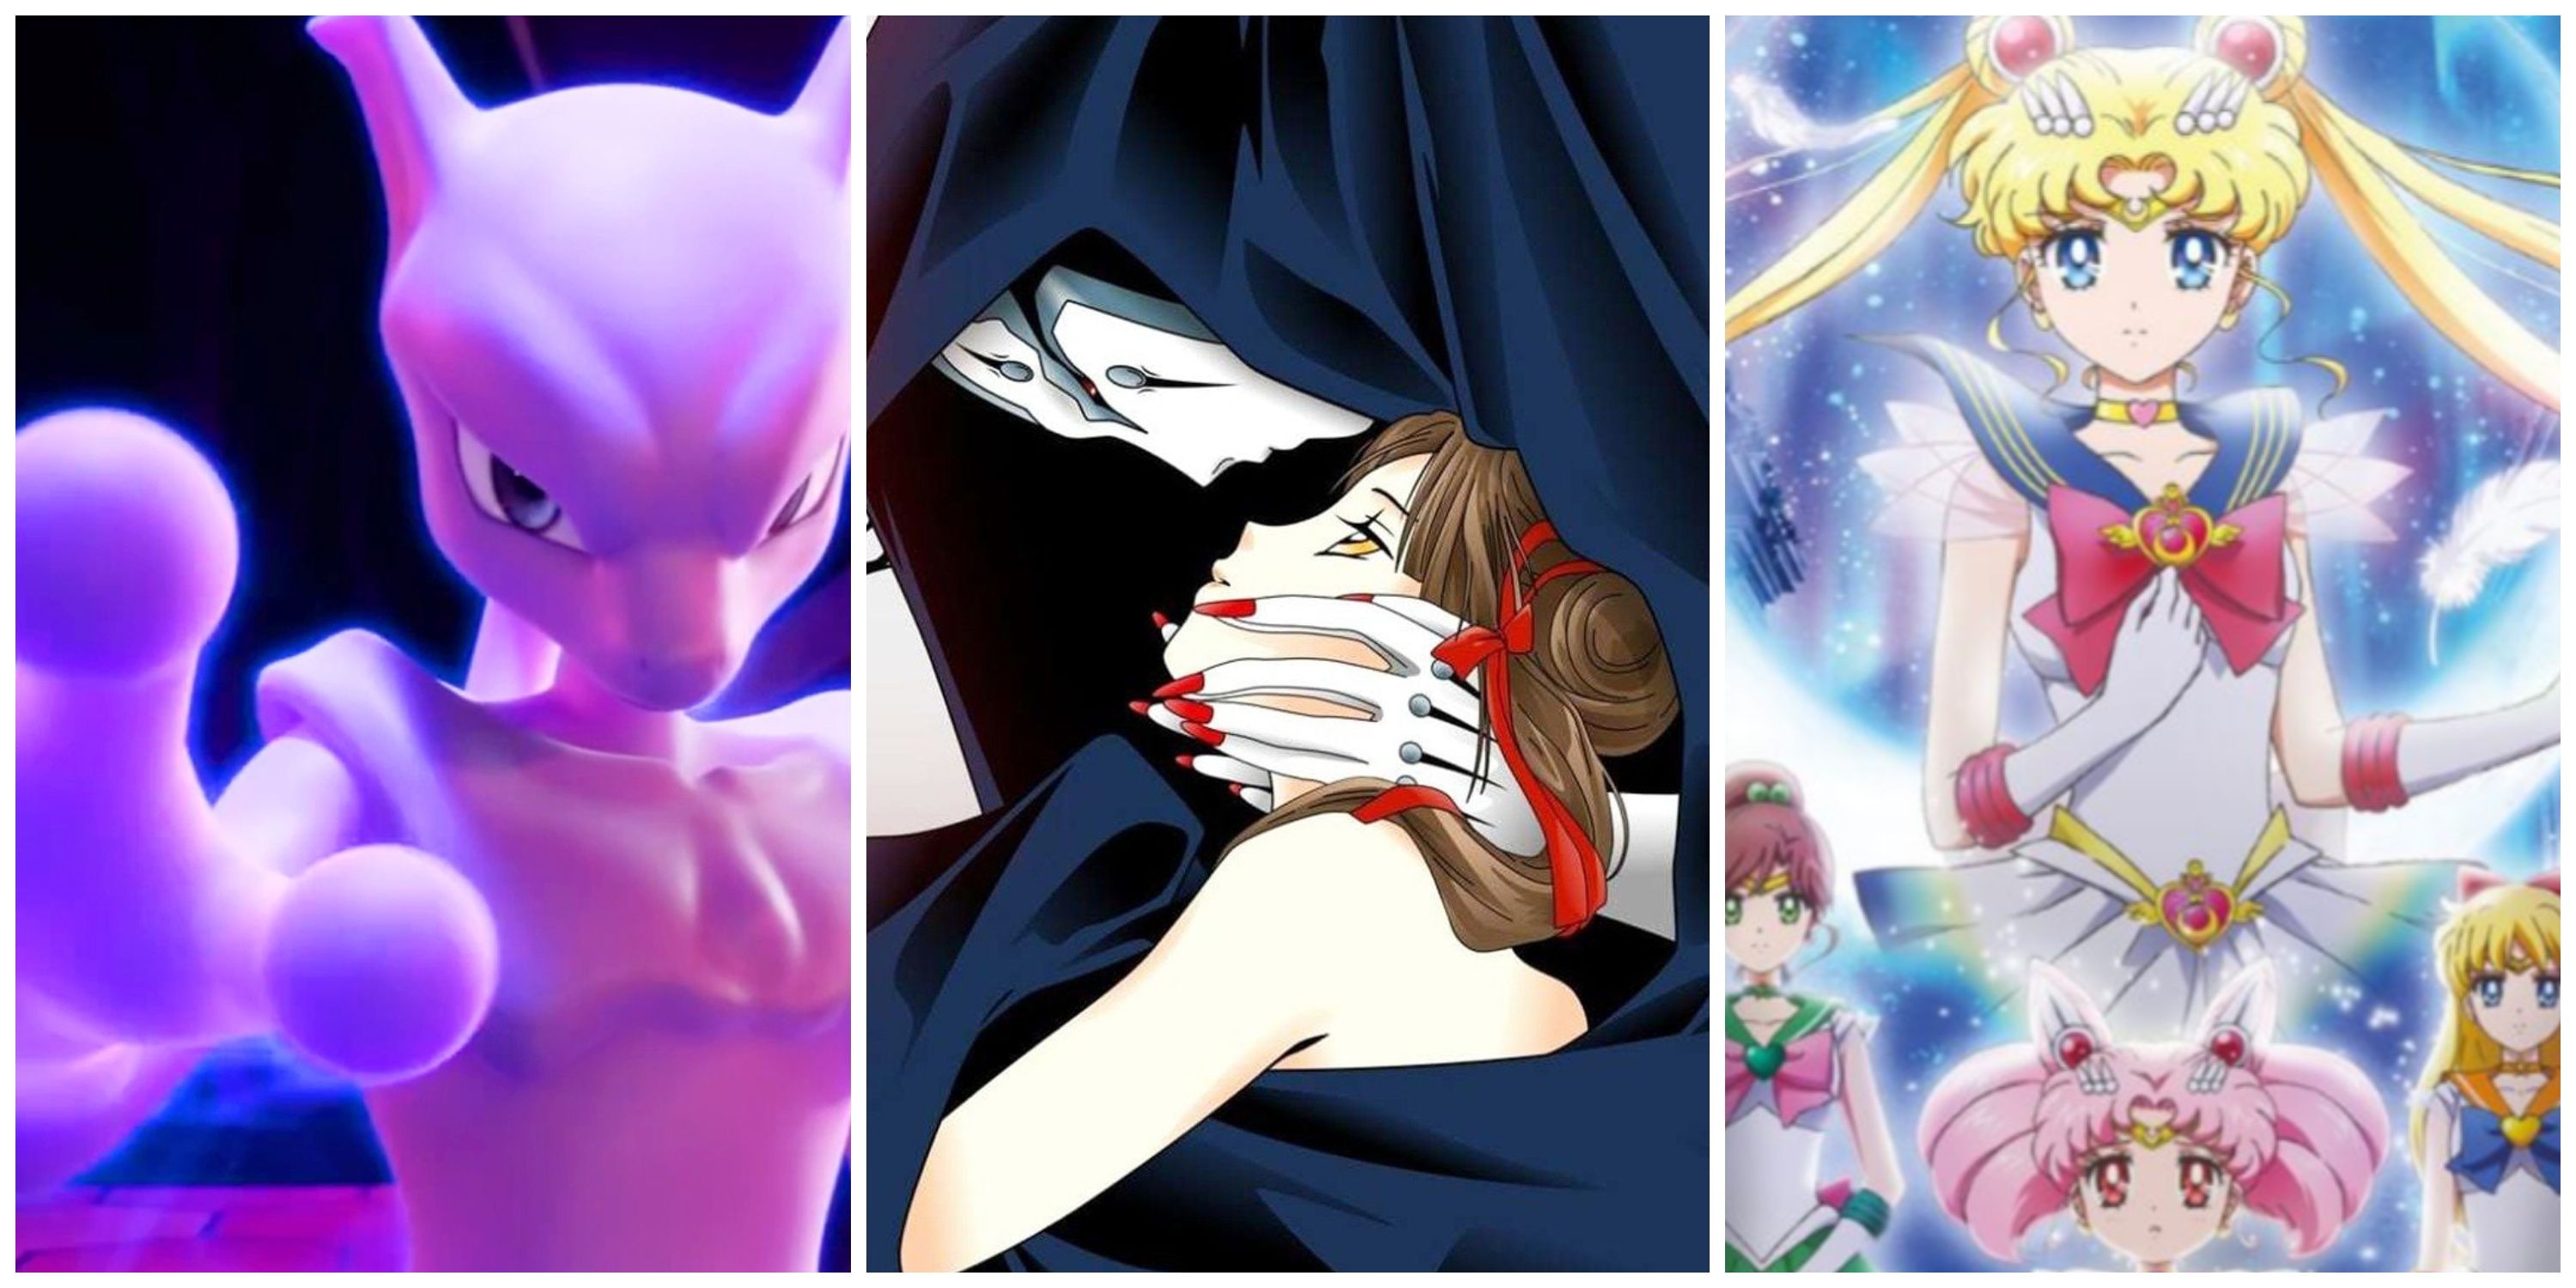 Mewtwo in Pokemon the Movie-Mewtwo Strikes Back Evolution, Larva and Miyu-Vampire Princess Miyu, Sailor Moon and Inner Senshi-Sailor Moon Crystal